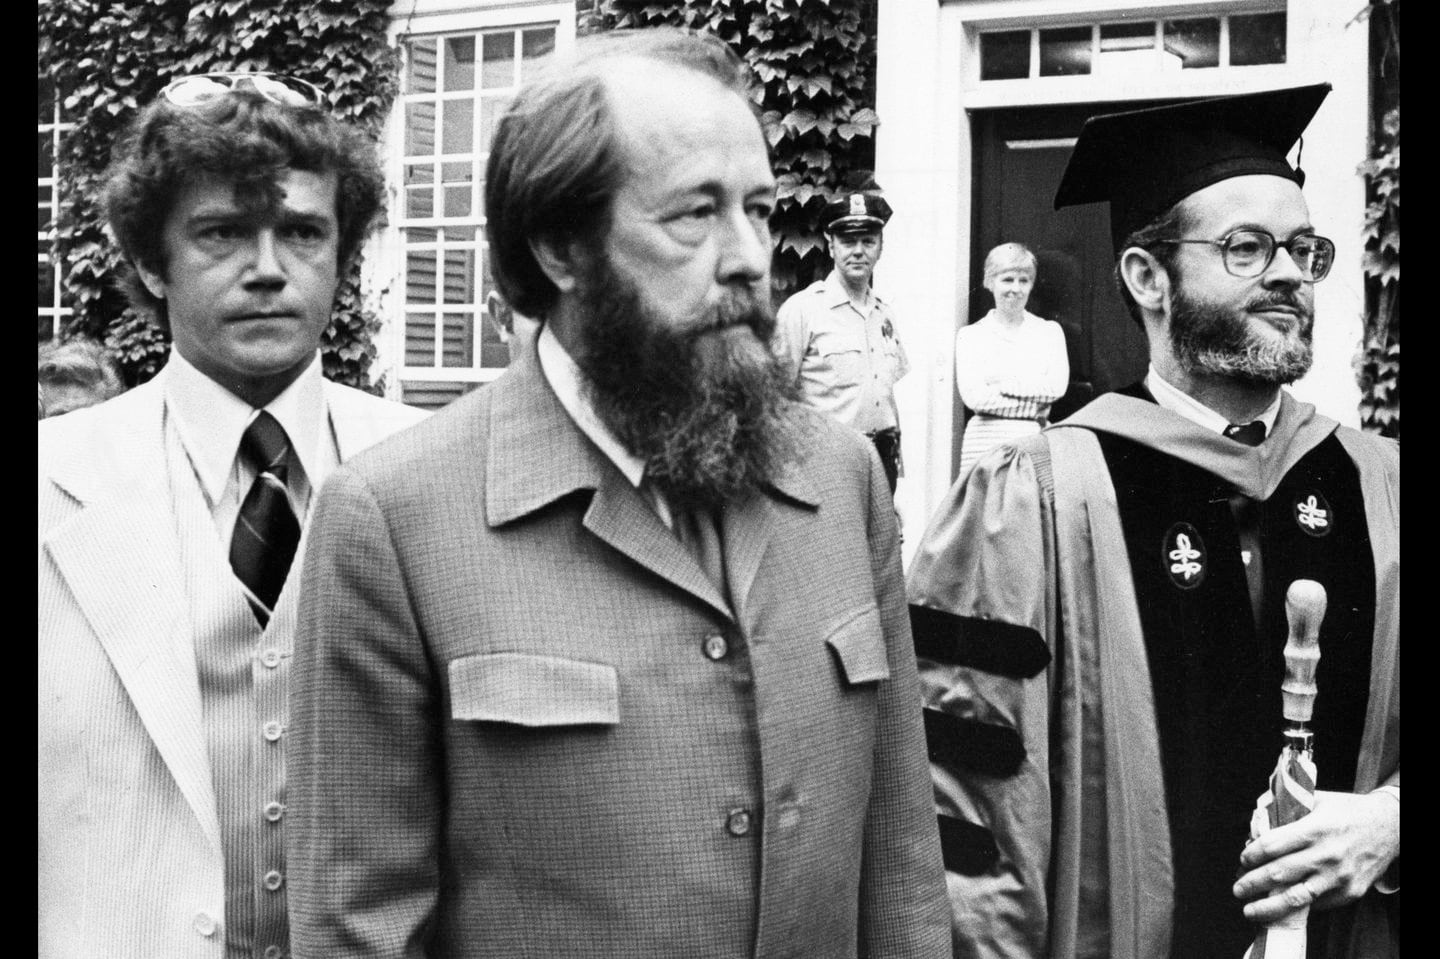 Russian novelist Aleksandr Solzhenitsyn stood with Harvard University Dean Edward L. Keenan, right, during the 1978 Harvard commencement on Jun. 8, 1978.